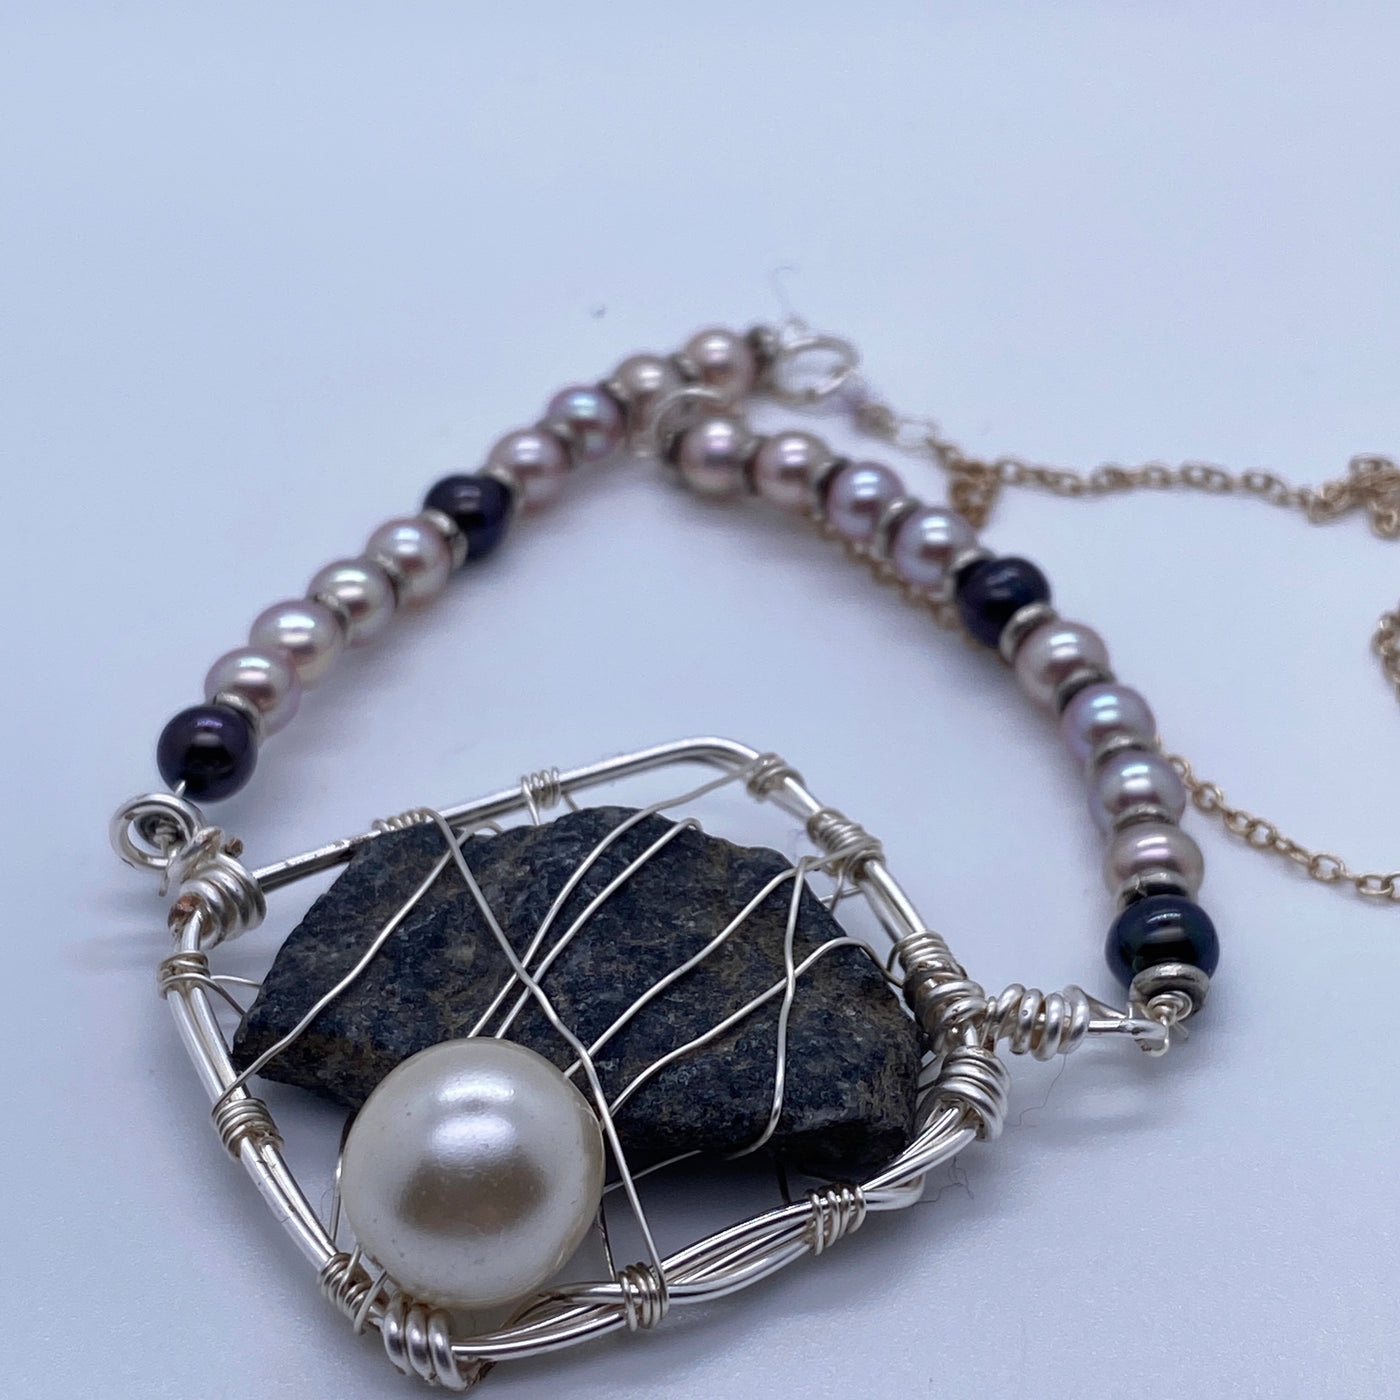 Elbastones meets pearls, lavender and black